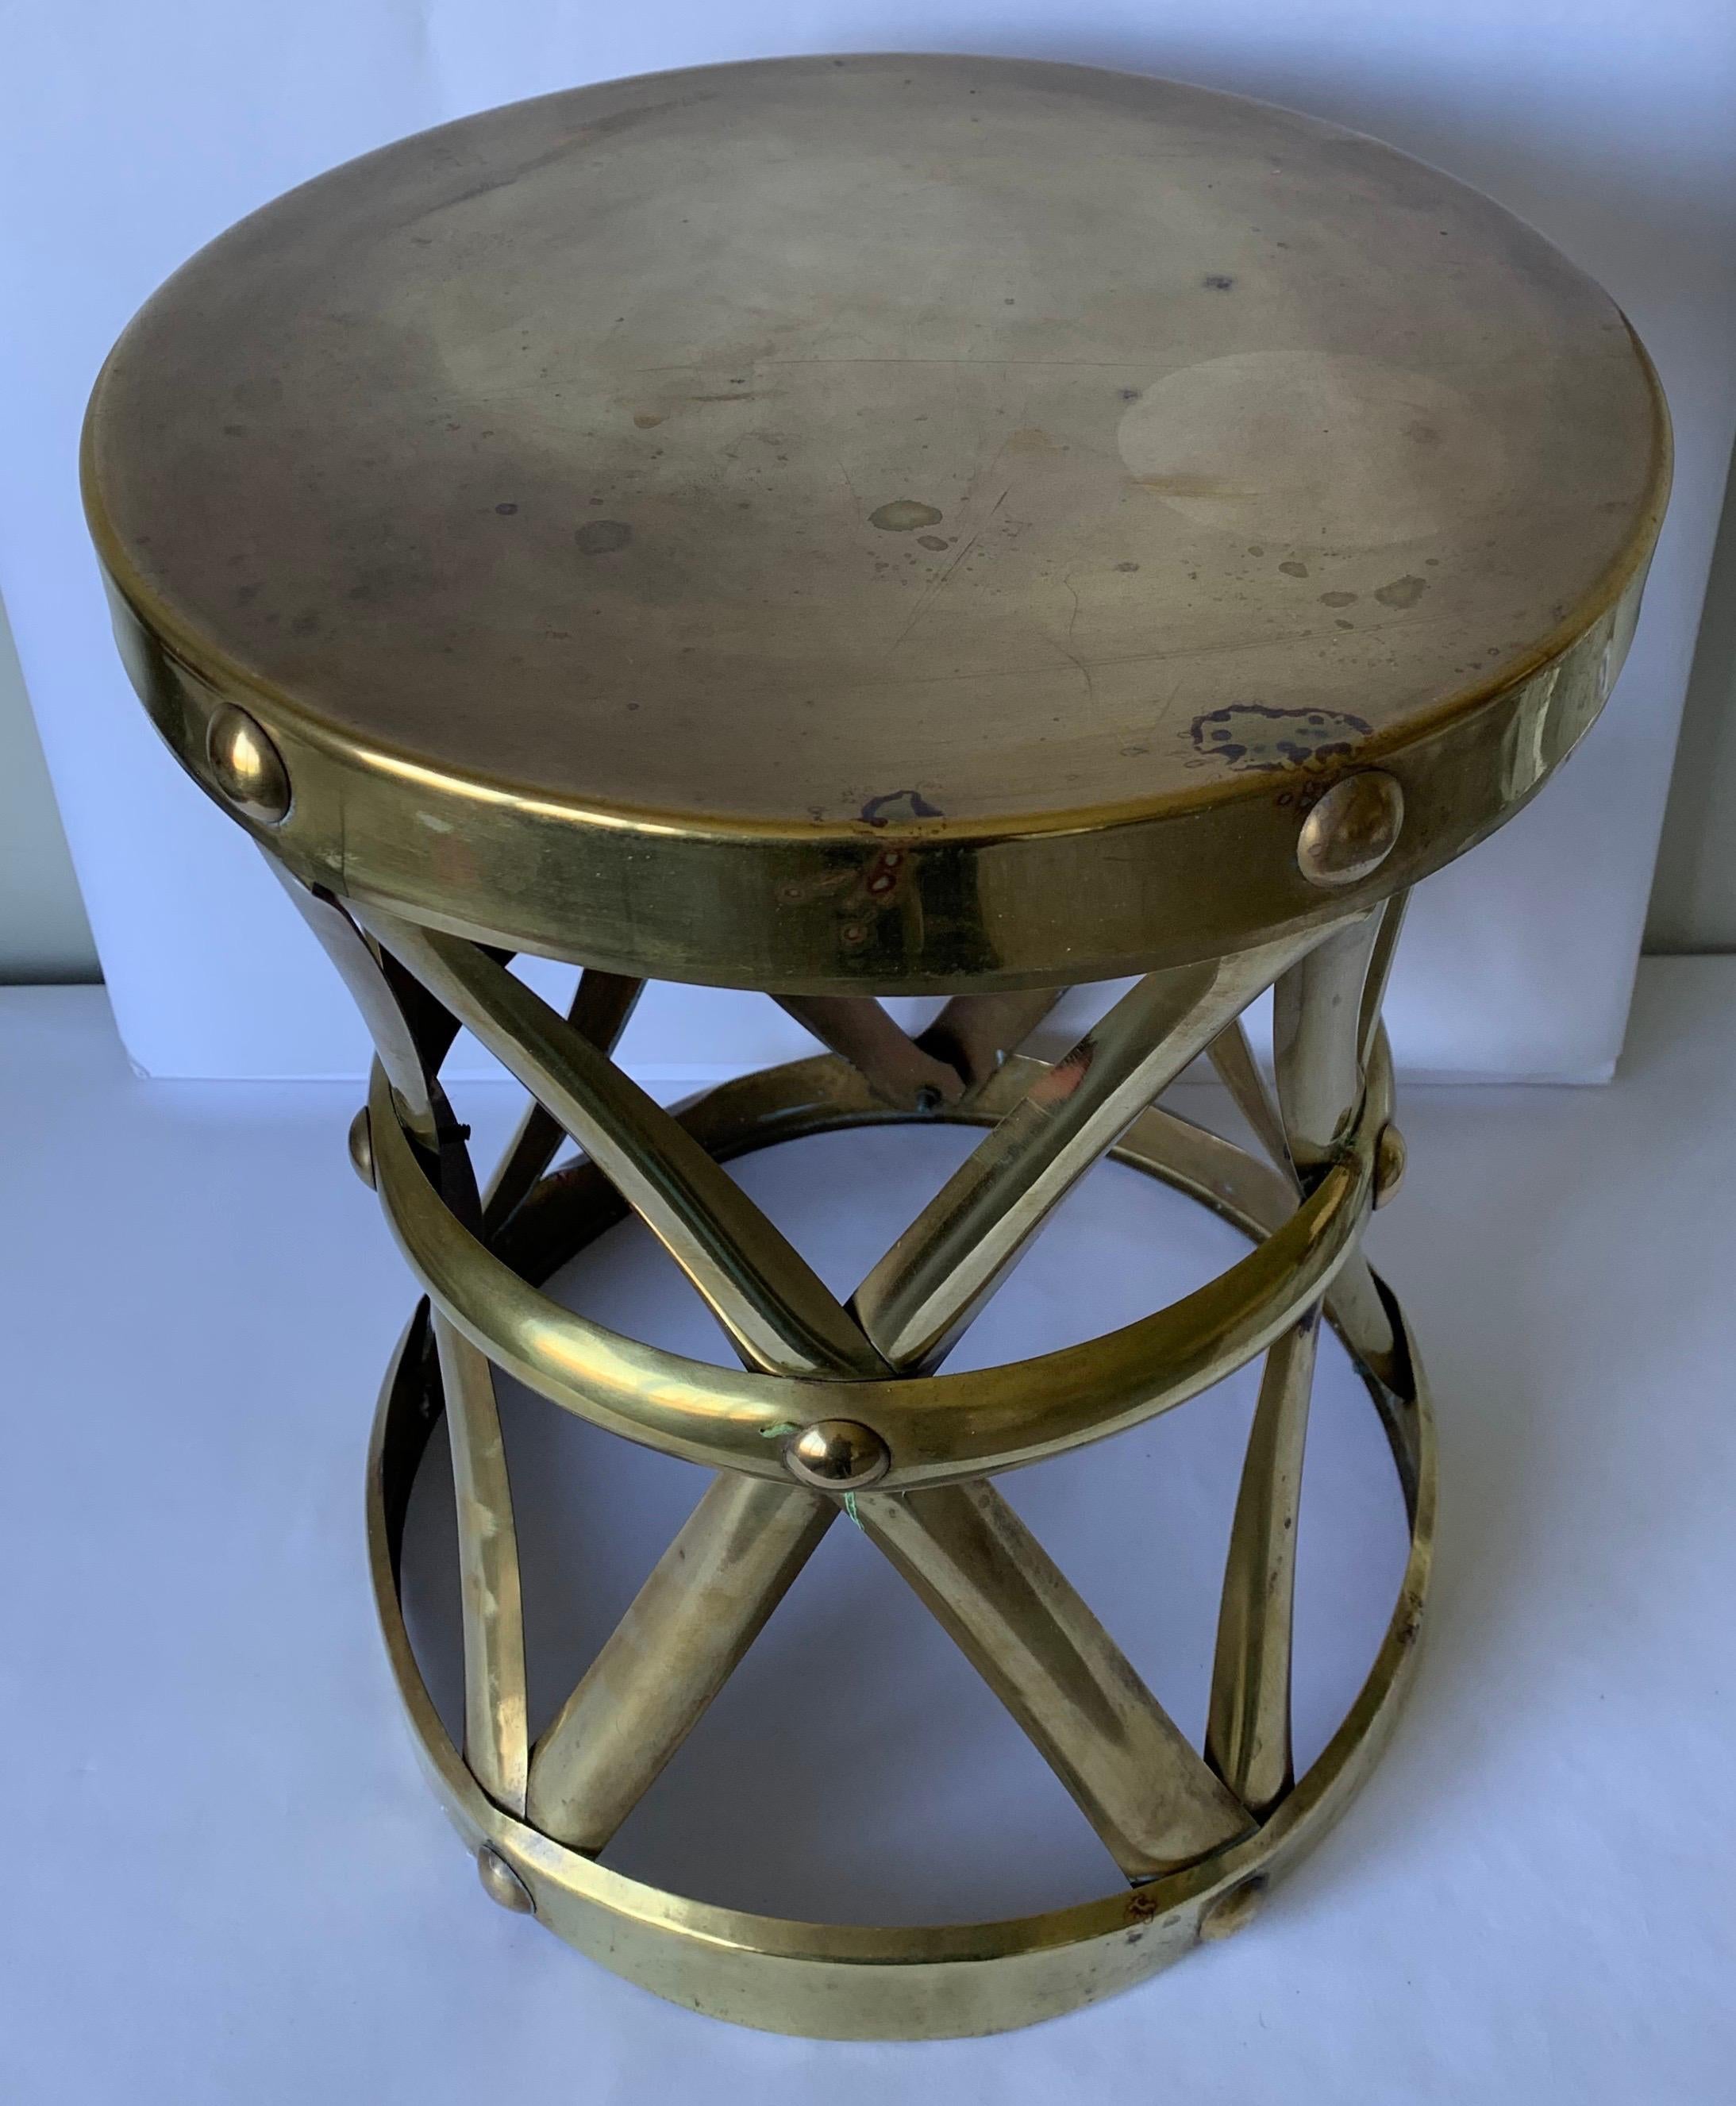 1970s brass tabourert X-frame stool. Original brass finish with overall unpolished patina.